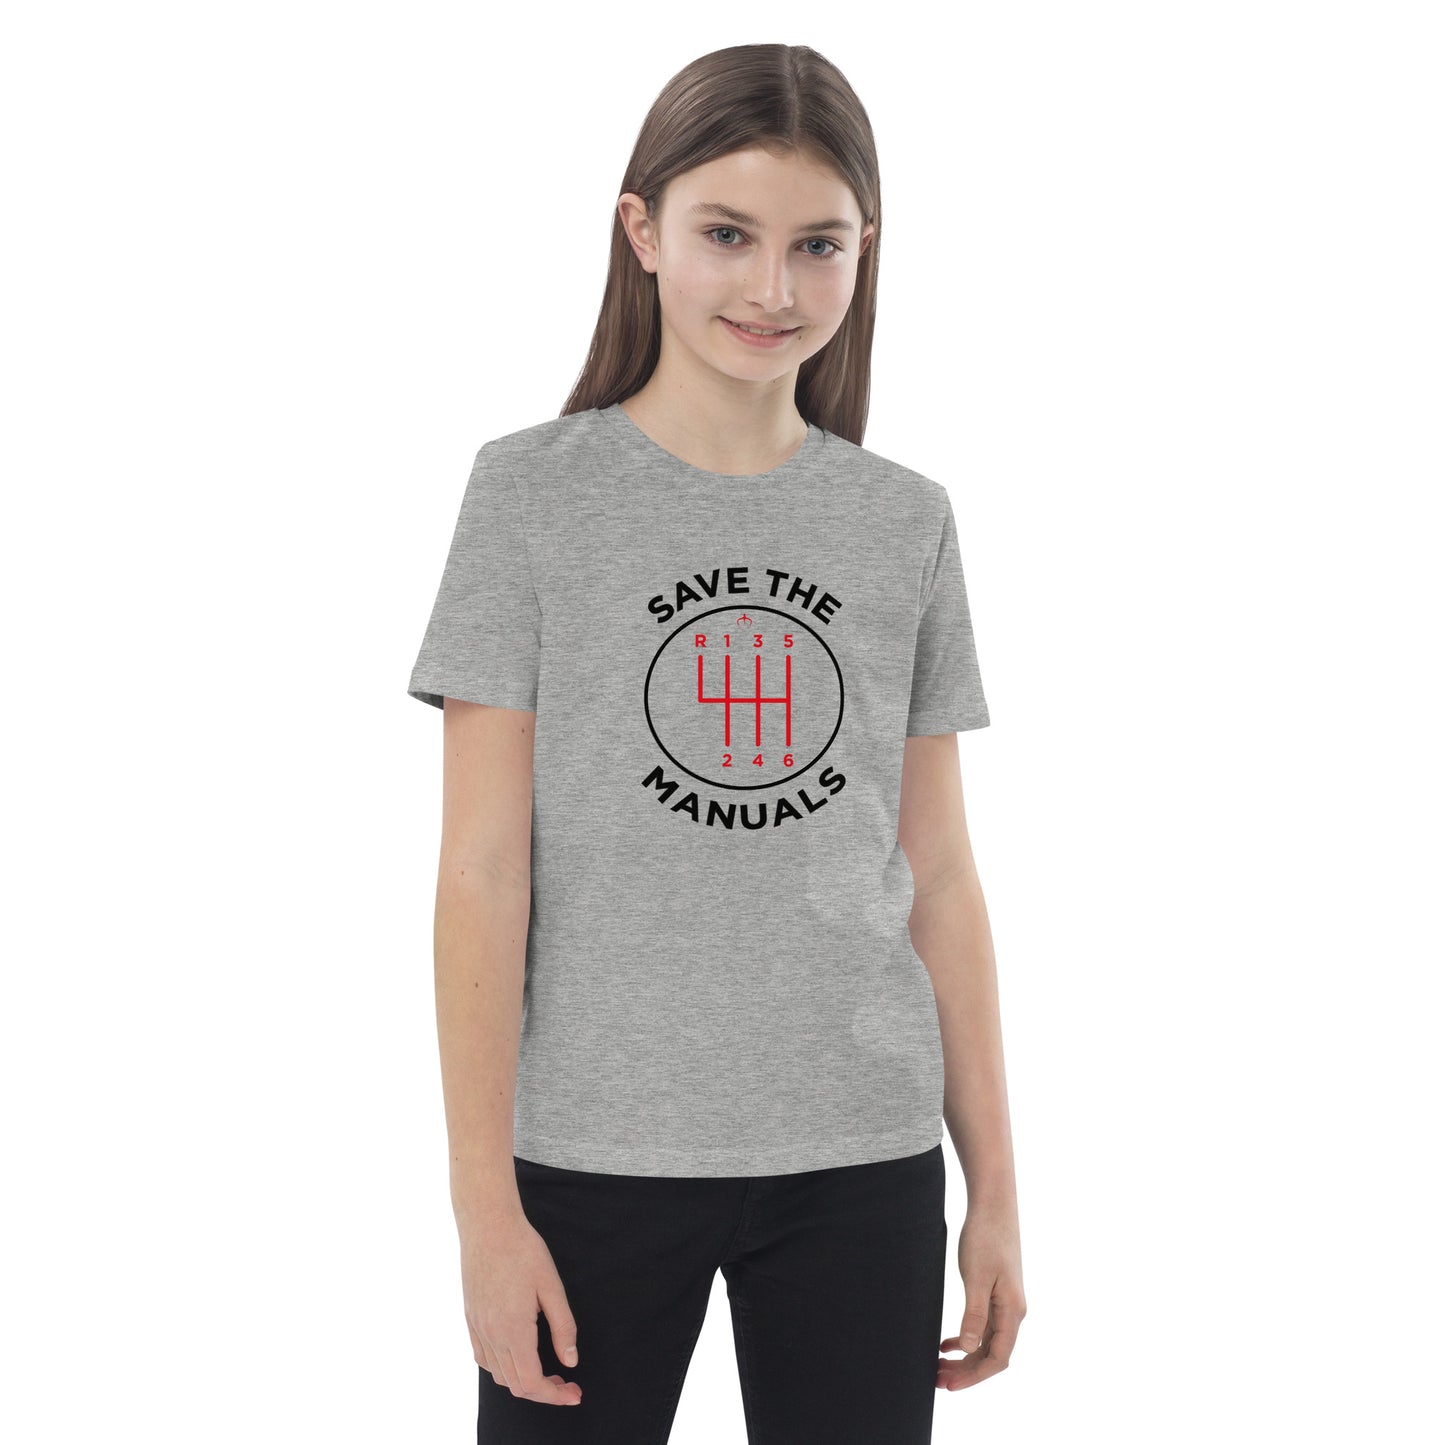 Save the Manuals "Garage Days" 1 of 100 unisex kids t-shirt